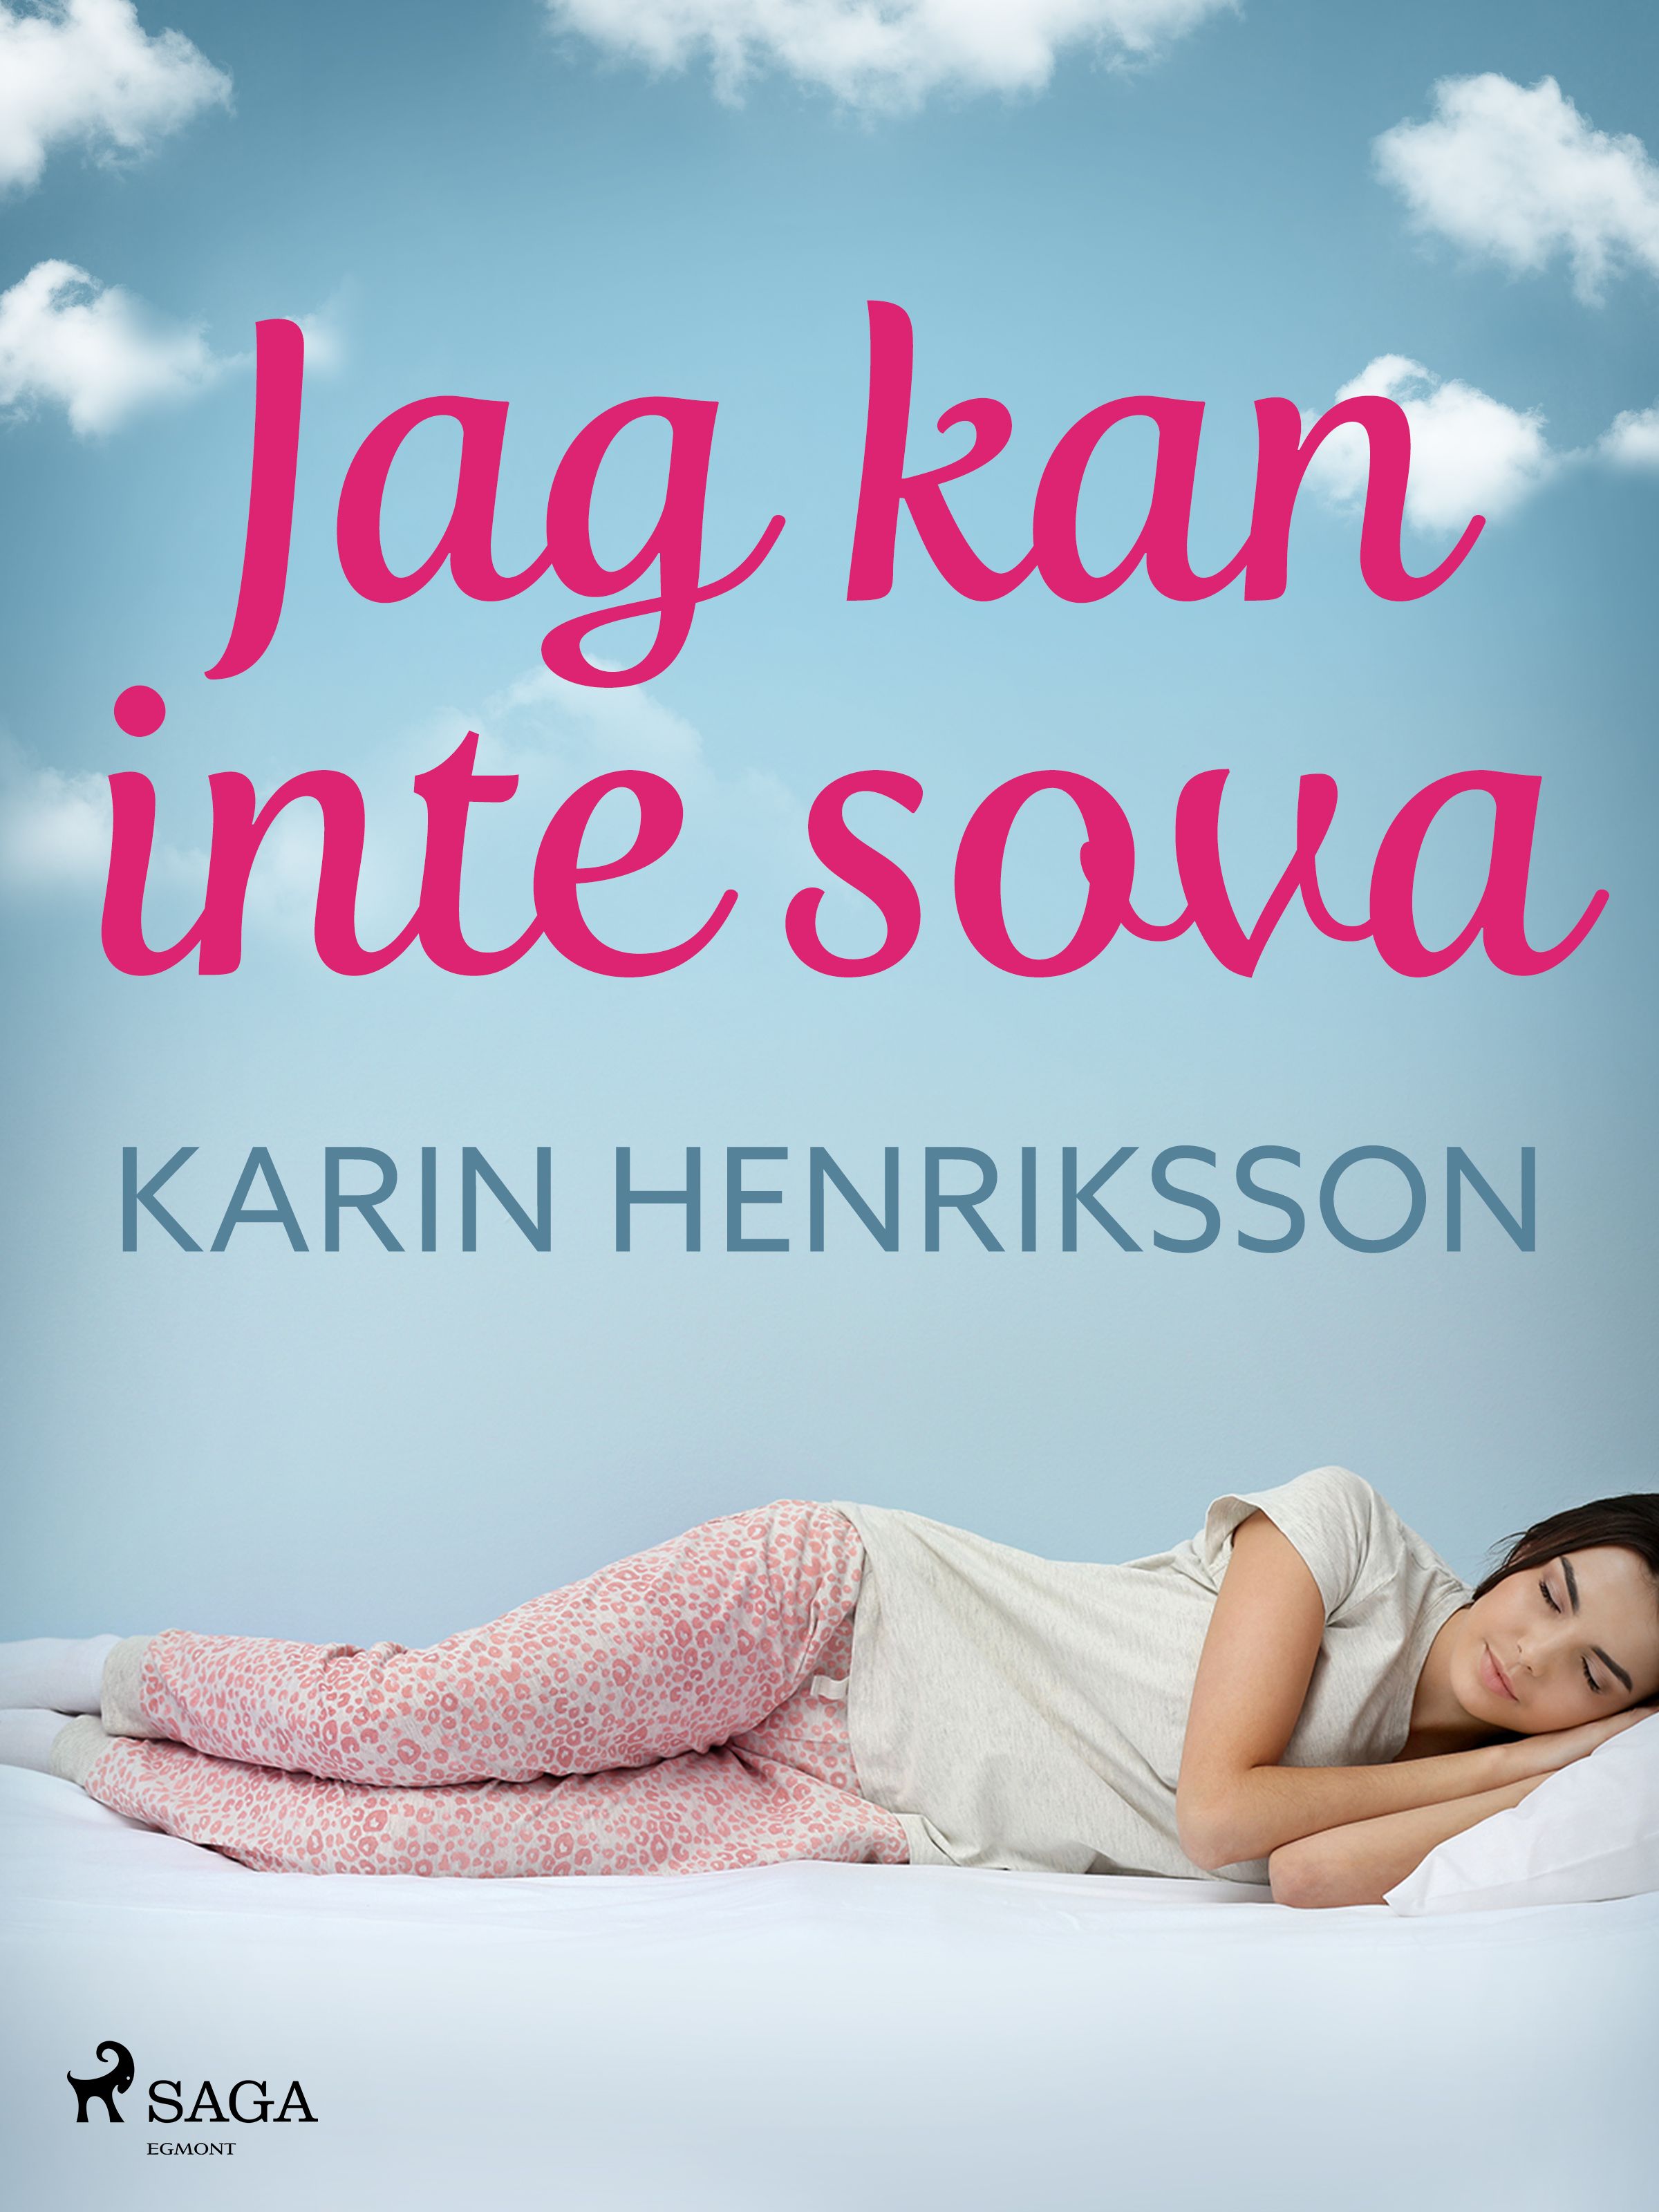 Jag kan inte sova, e-bok av Karin Henriksson